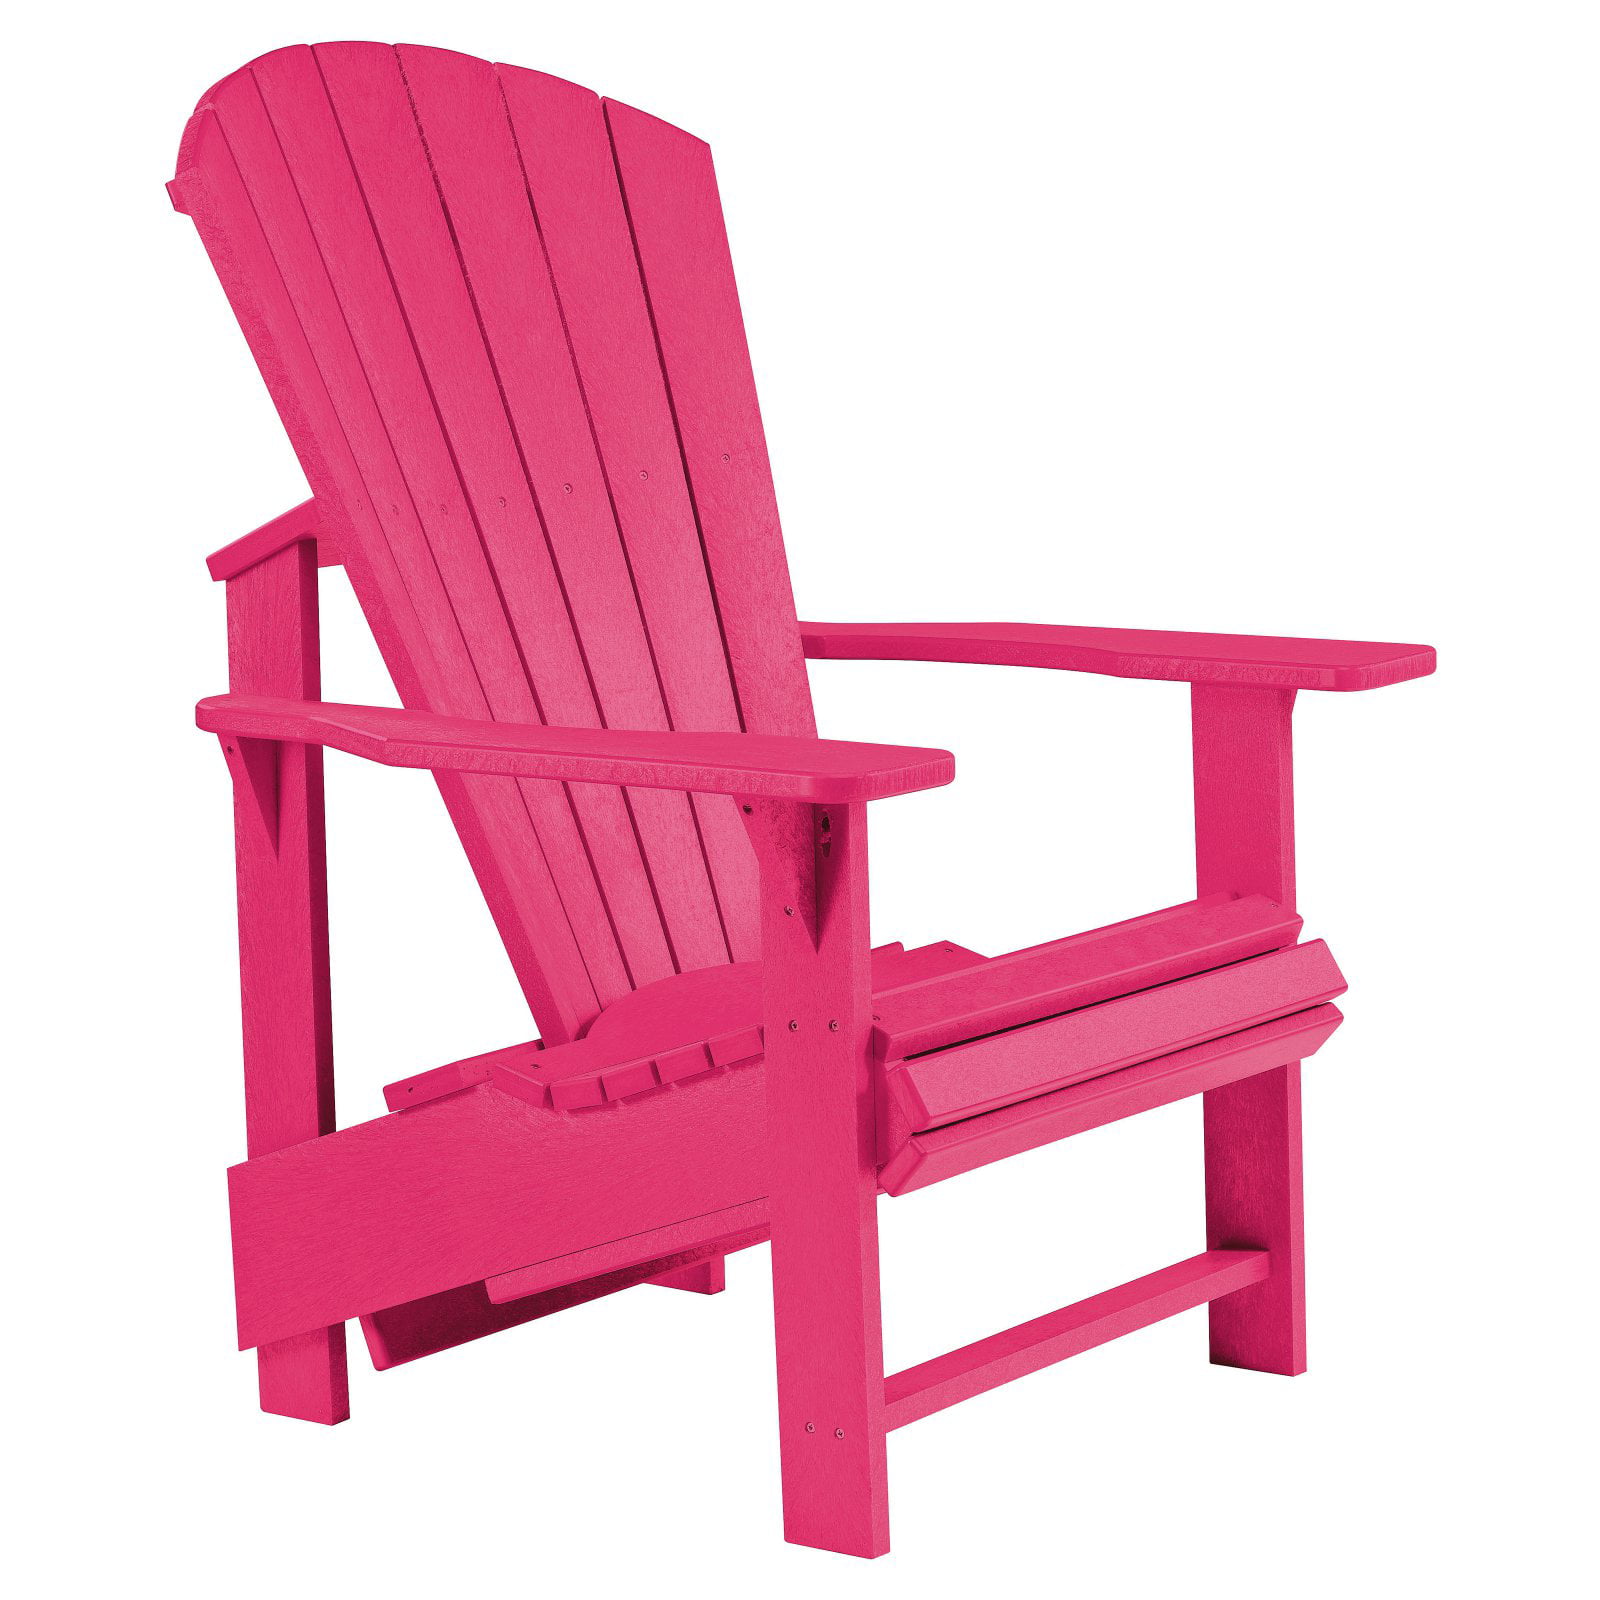 C.R. Plastic Generations Upright Adirondack Chair